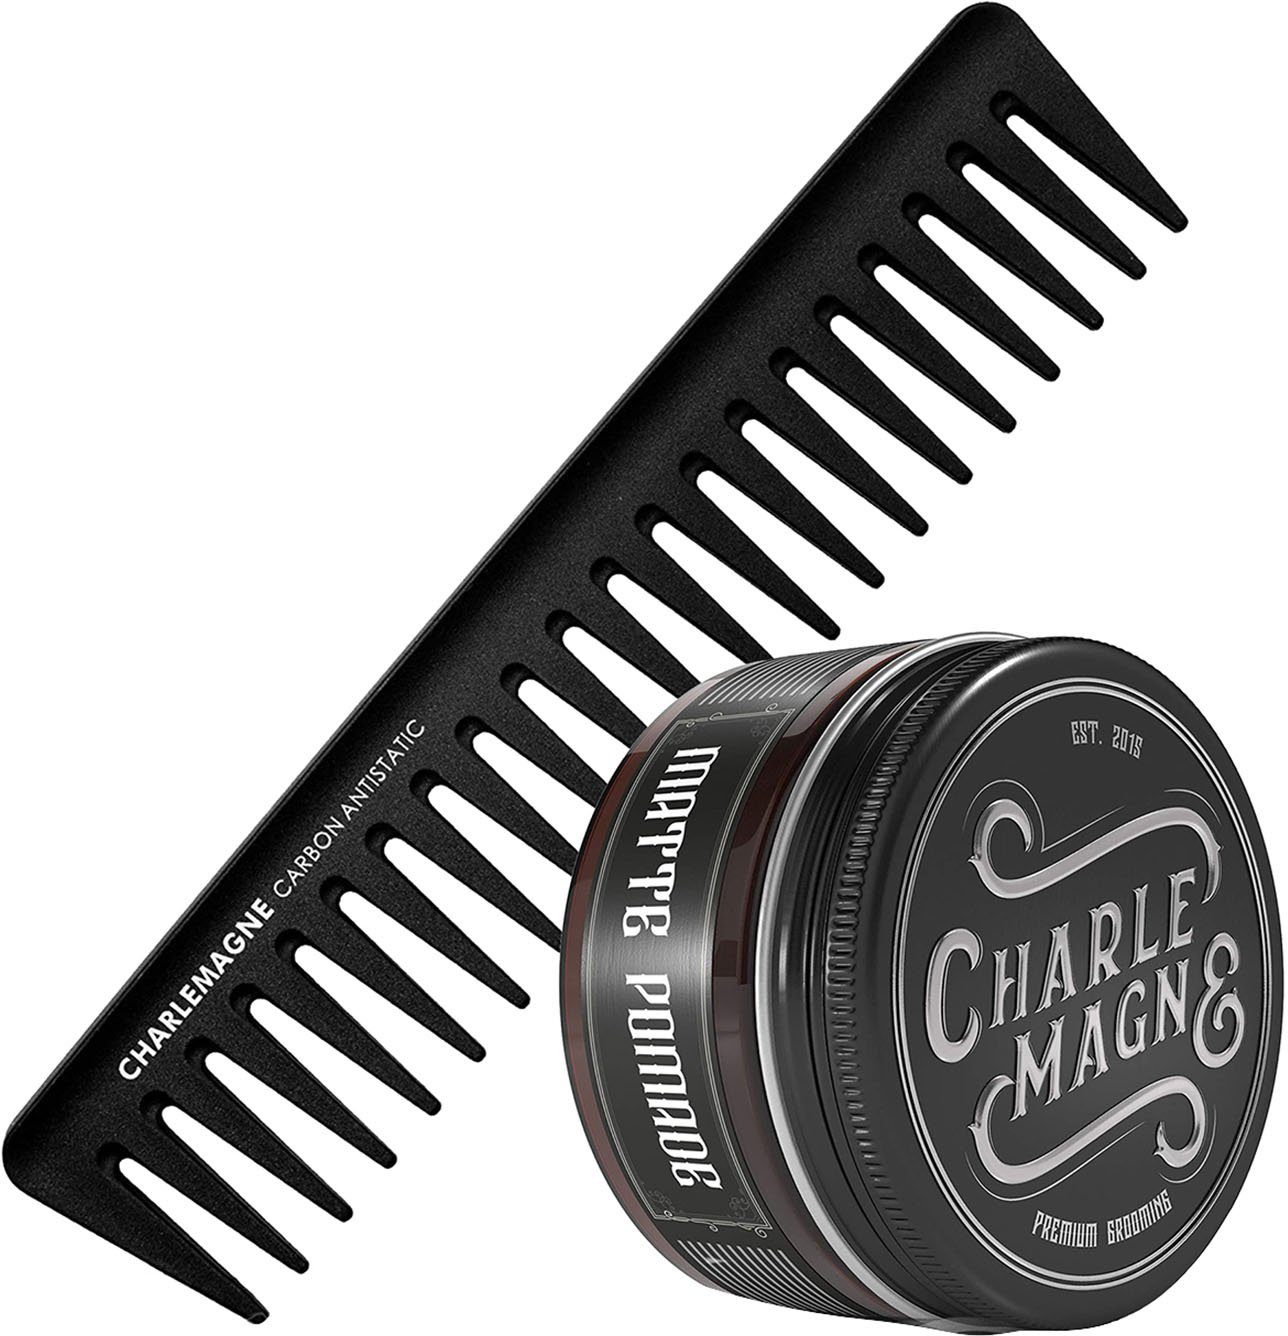 CHARLEMAGNE Haarpflege-Set Charly\'s Essentials